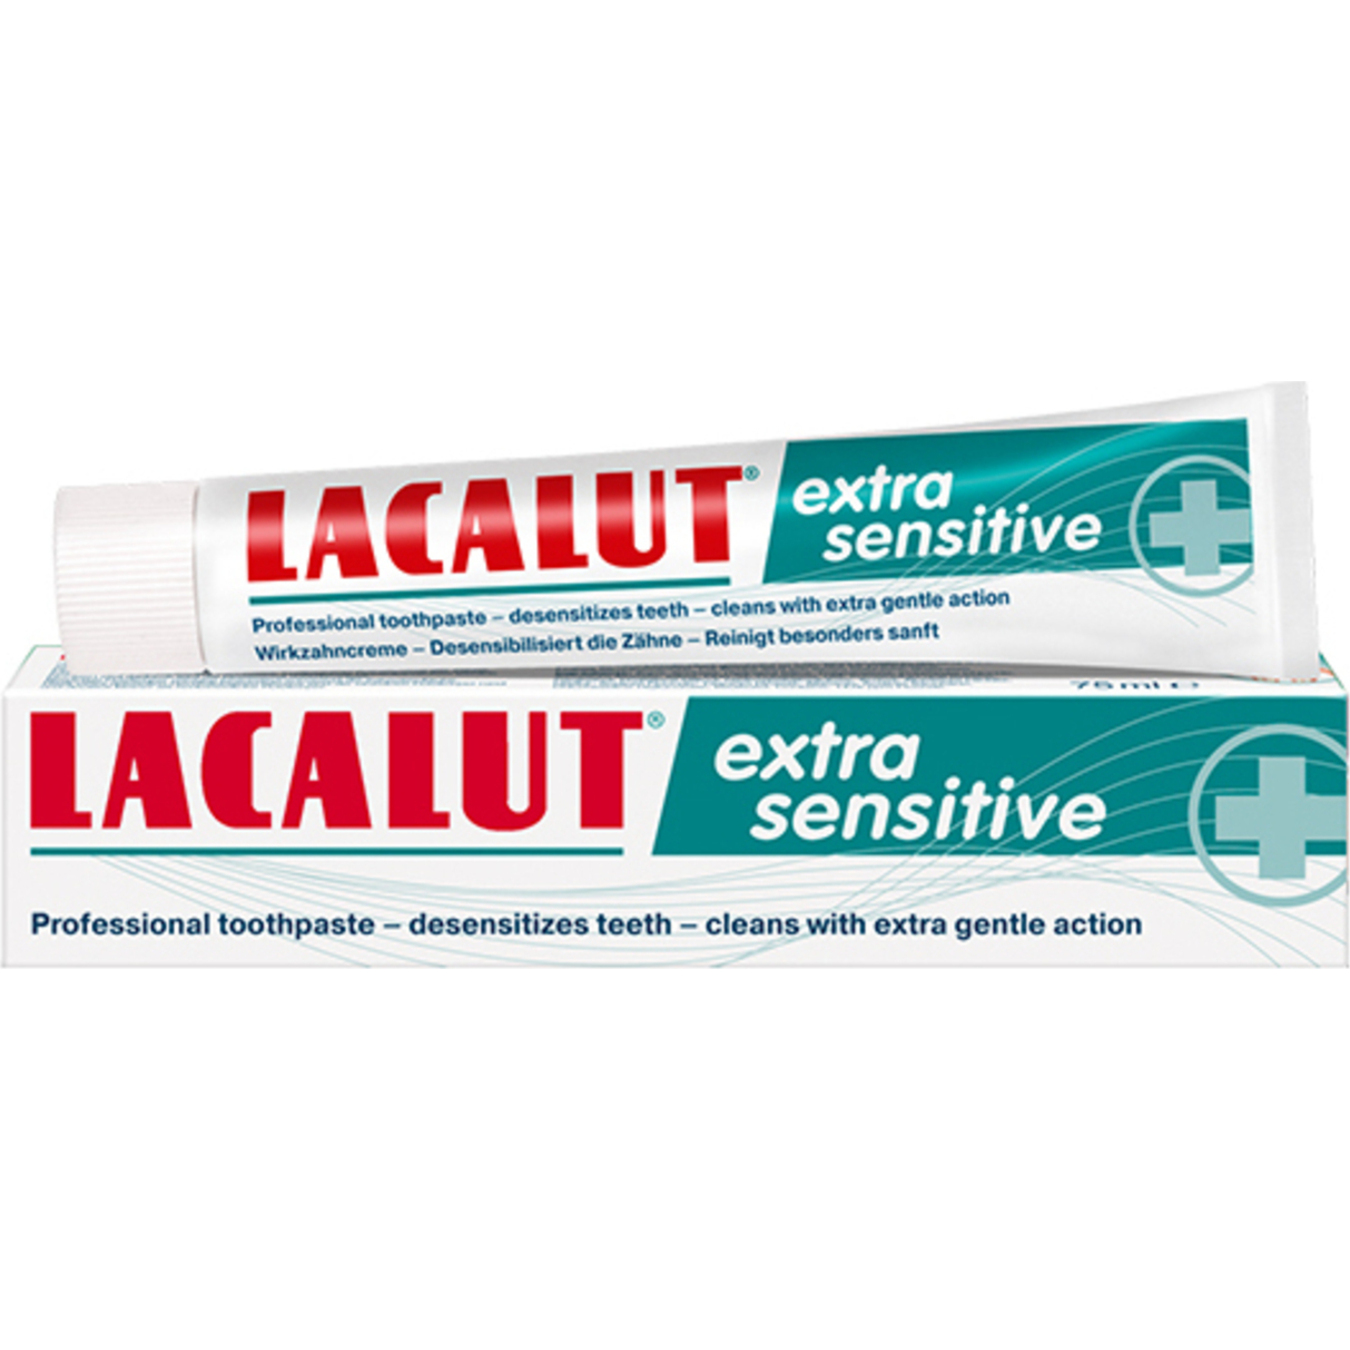 Lacalut Extra Sensitive Toothpaste 75ml
